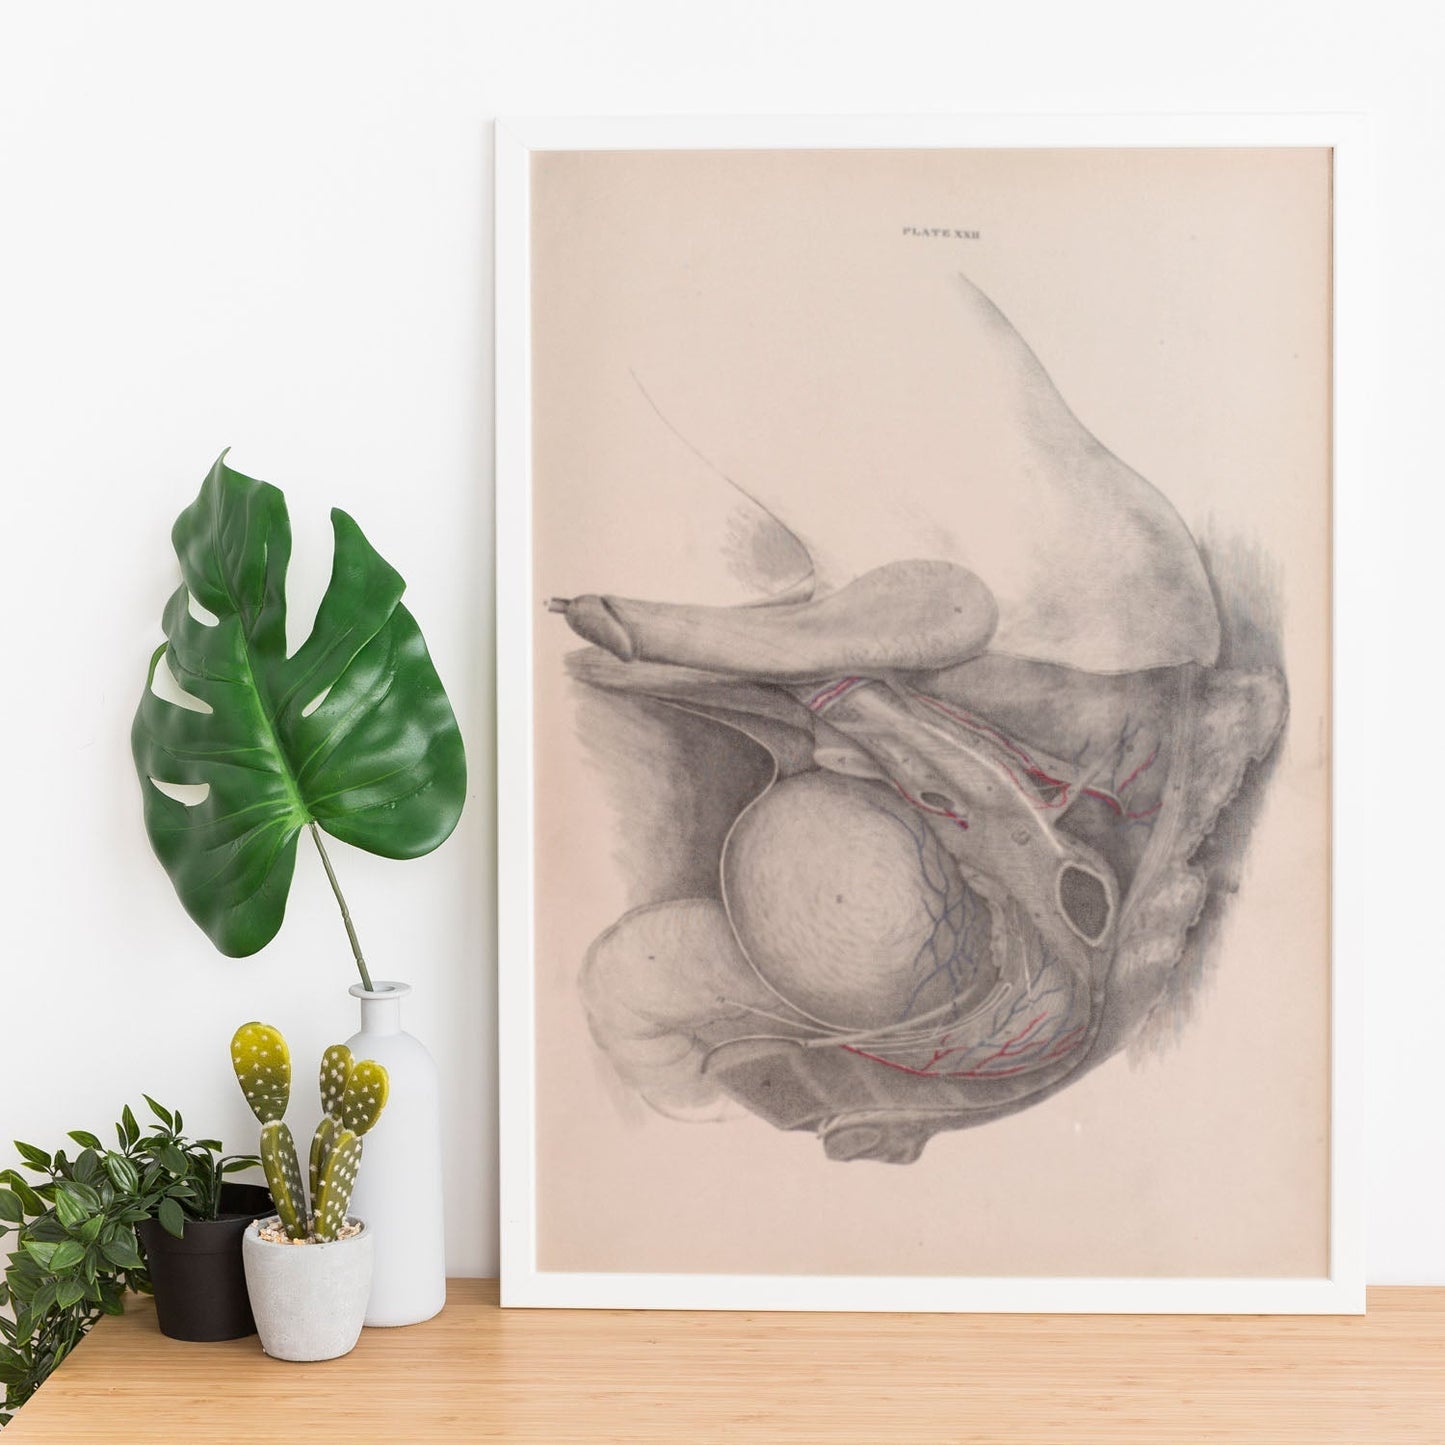 Dissection of the pelvis, urogenital system, male-Artwork-Nacnic-Nacnic Estudio SL